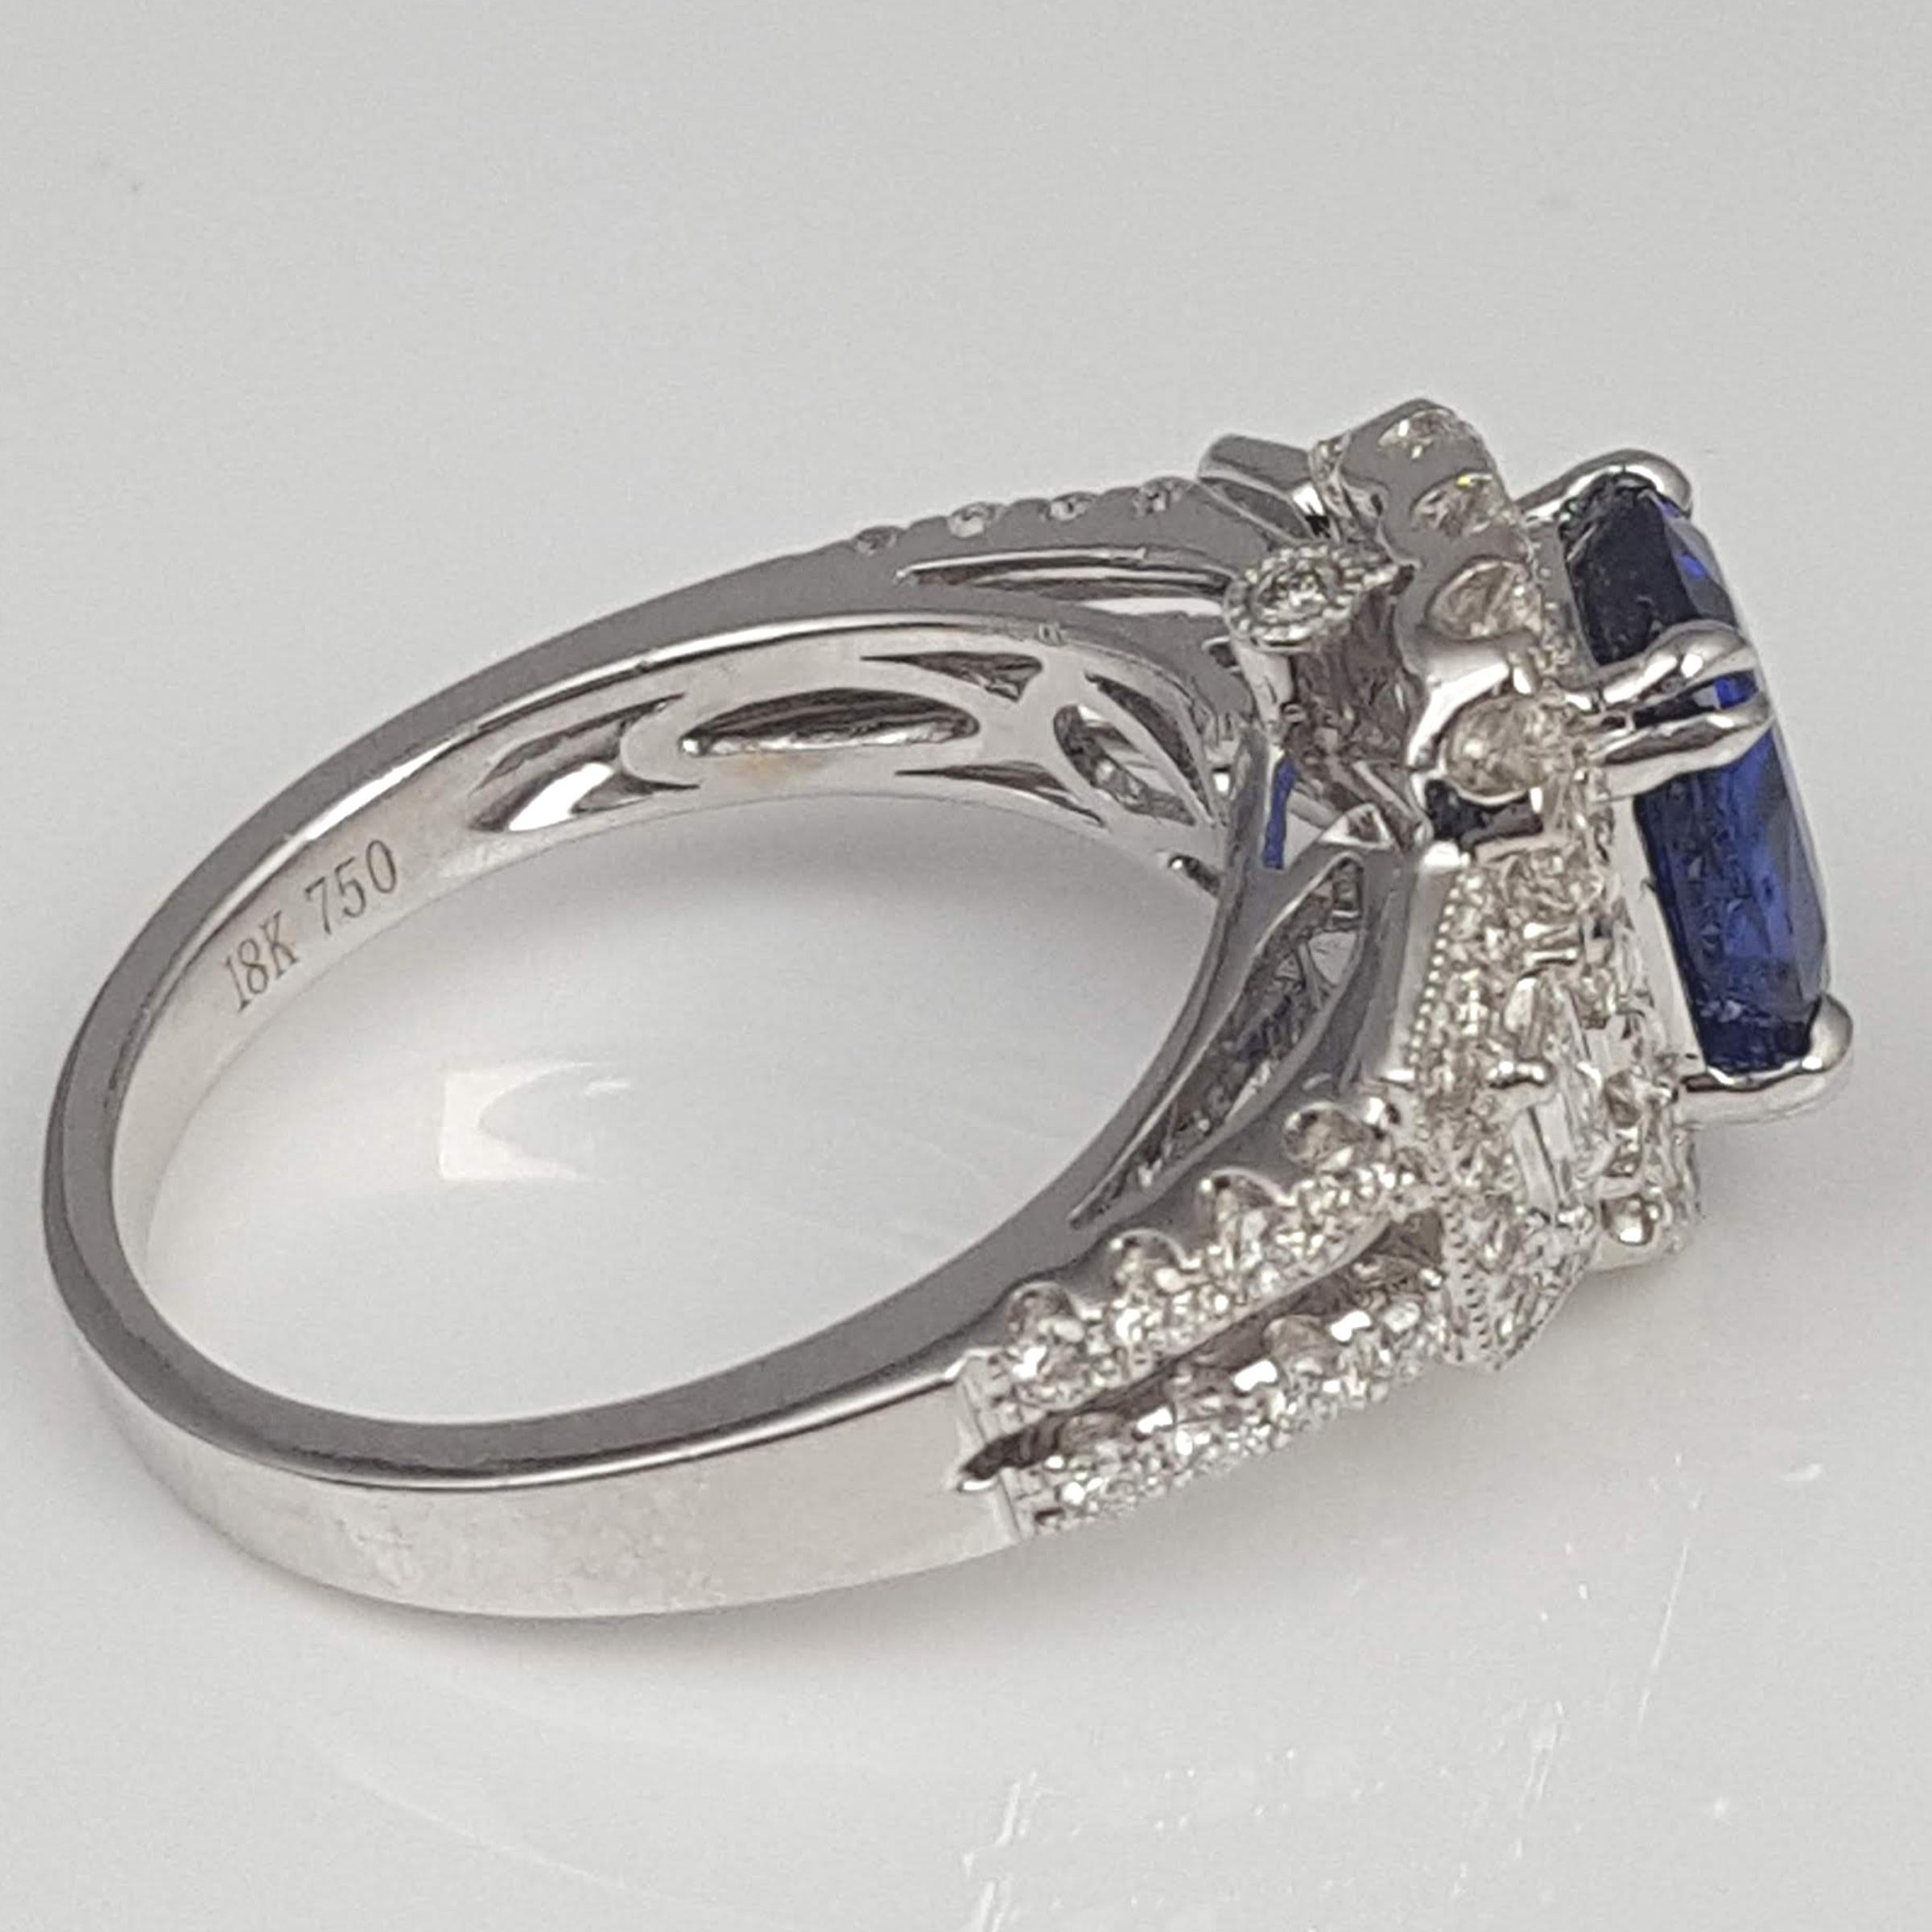 Women's DiamondTown GIA Certified 2.56 Carat Cushion Cut Ceylon Sapphire Ring